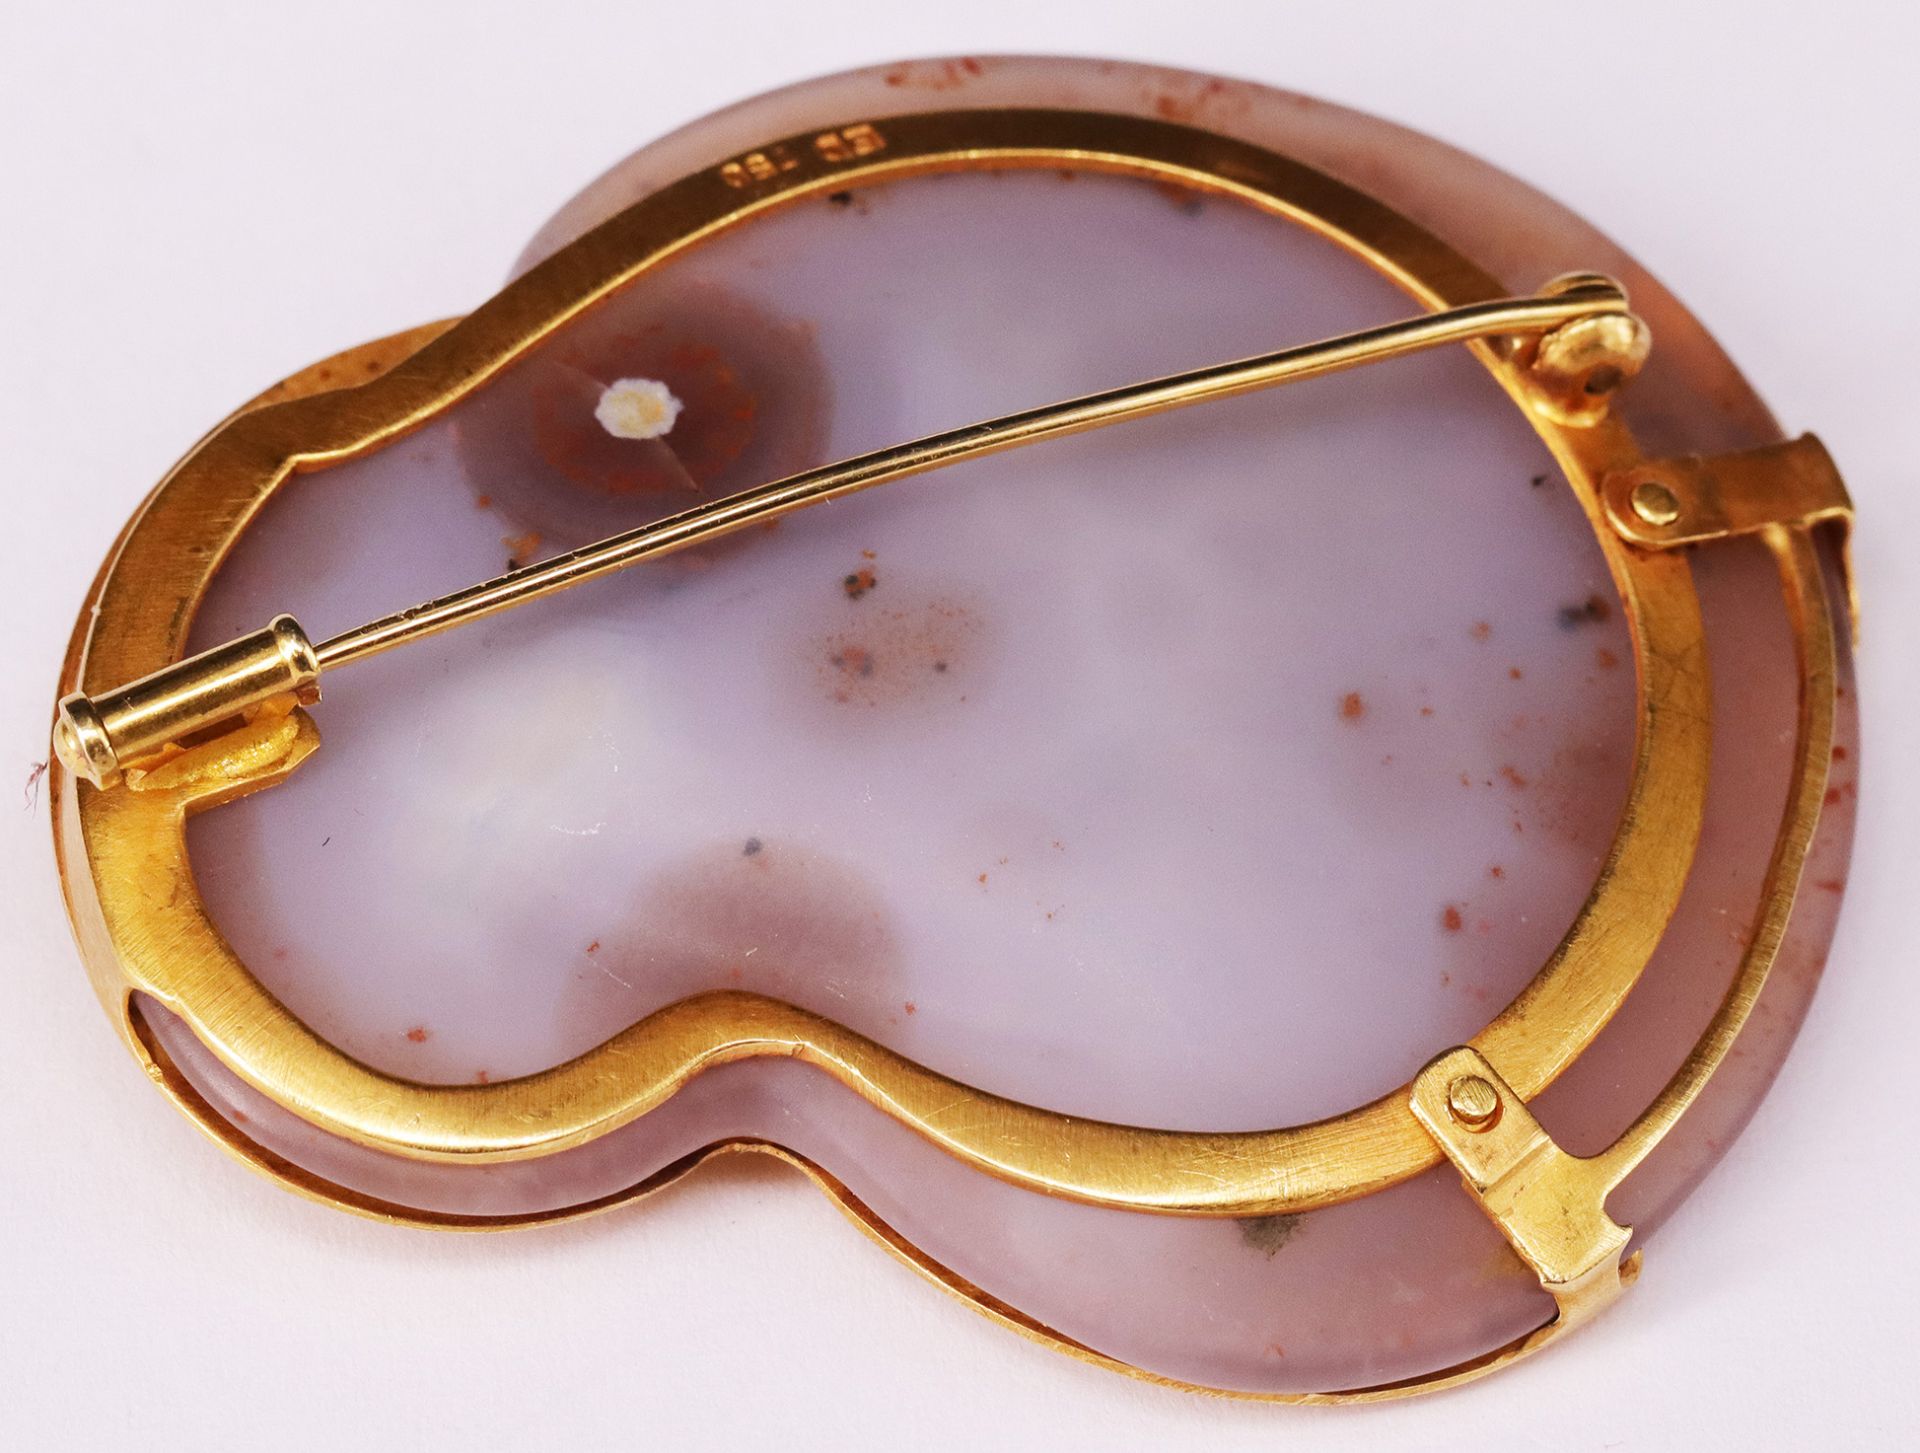 Brosche aus Quarzdruse und Brillant / brooch made of a quartz geode and a diamond. 750er GG, - Image 2 of 2